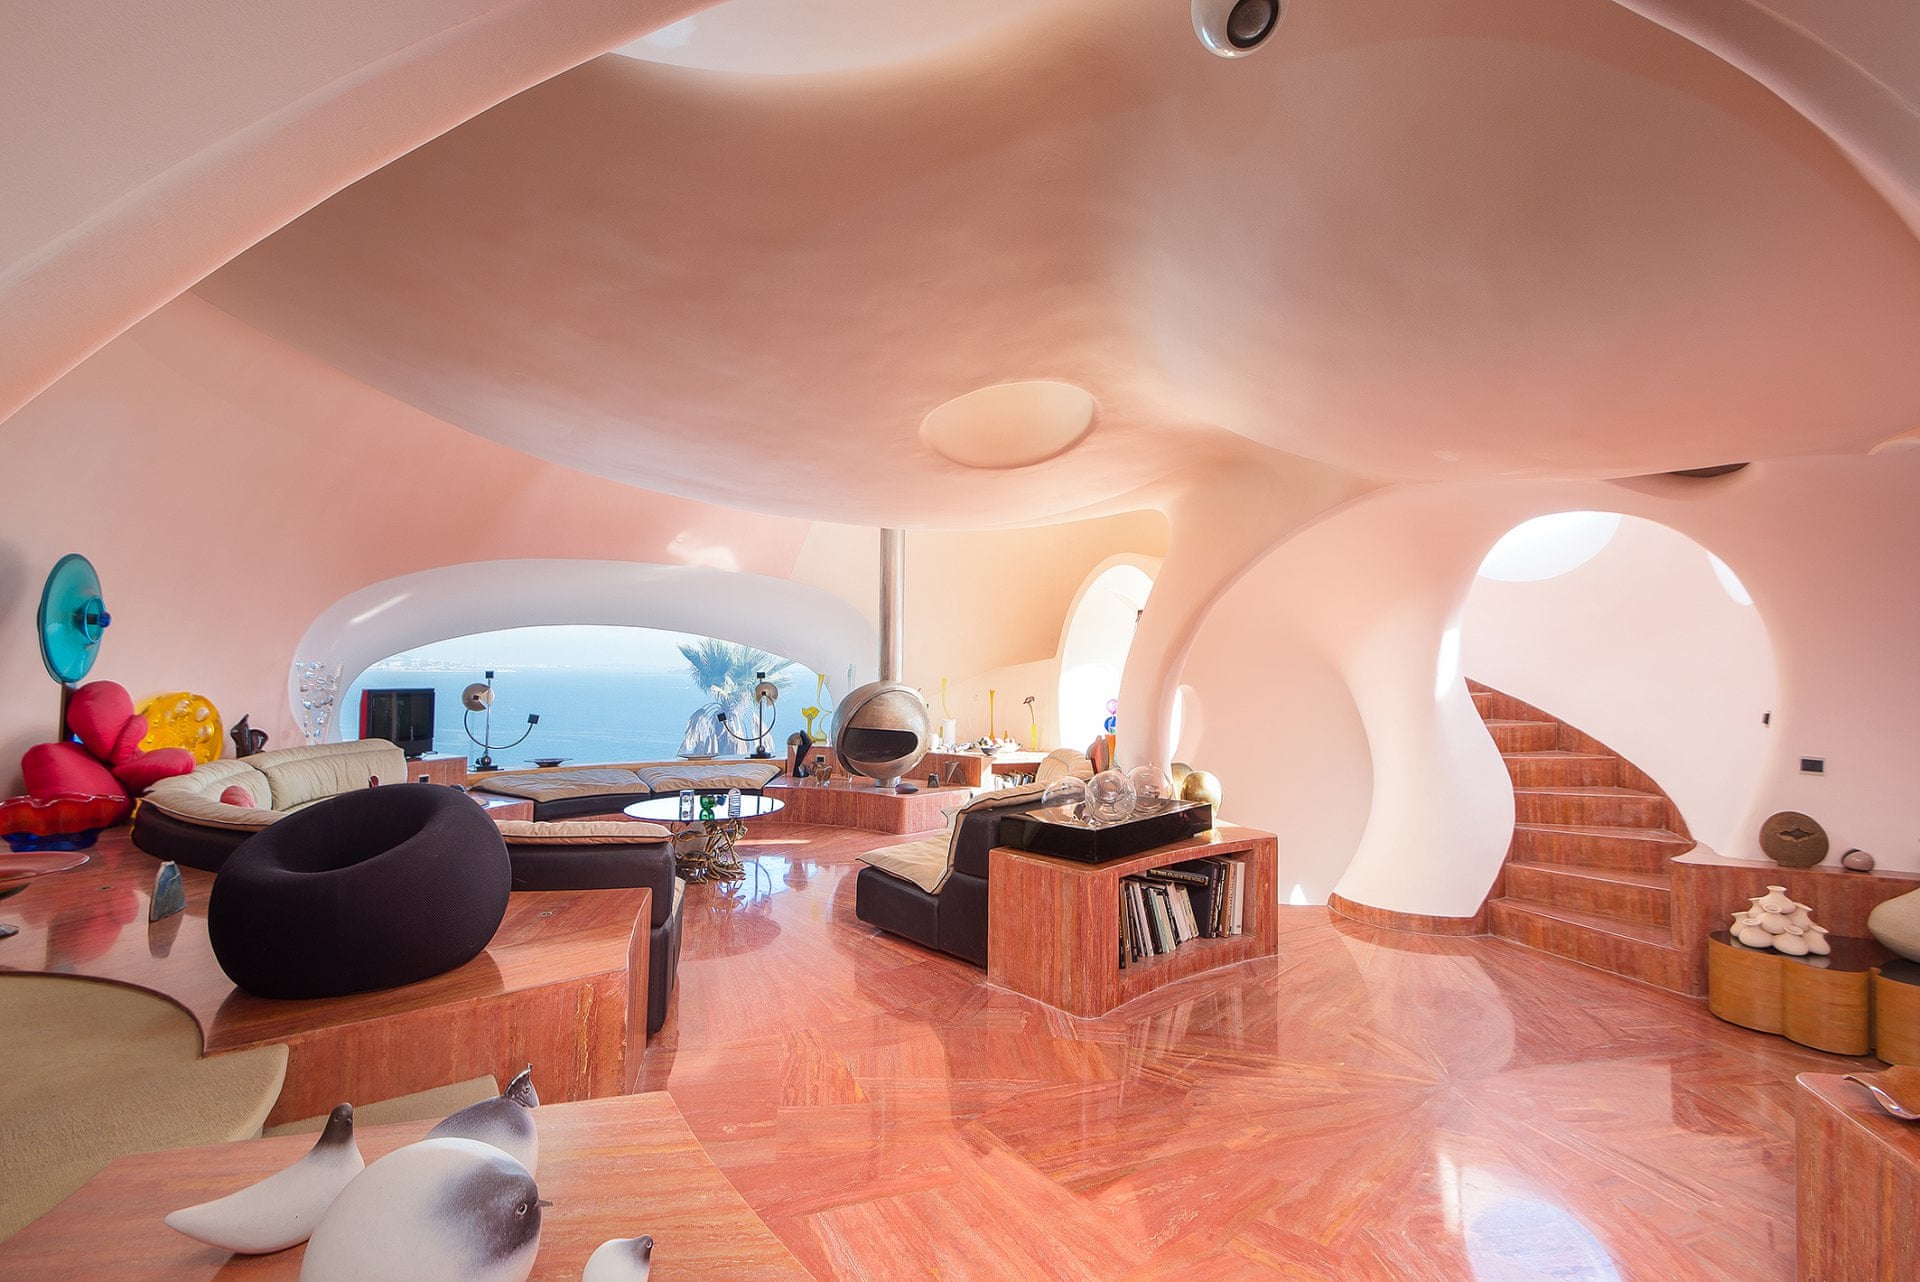 The Bubble Palace: A Tour of Pierre Cardin's Futuristic Home, Palais